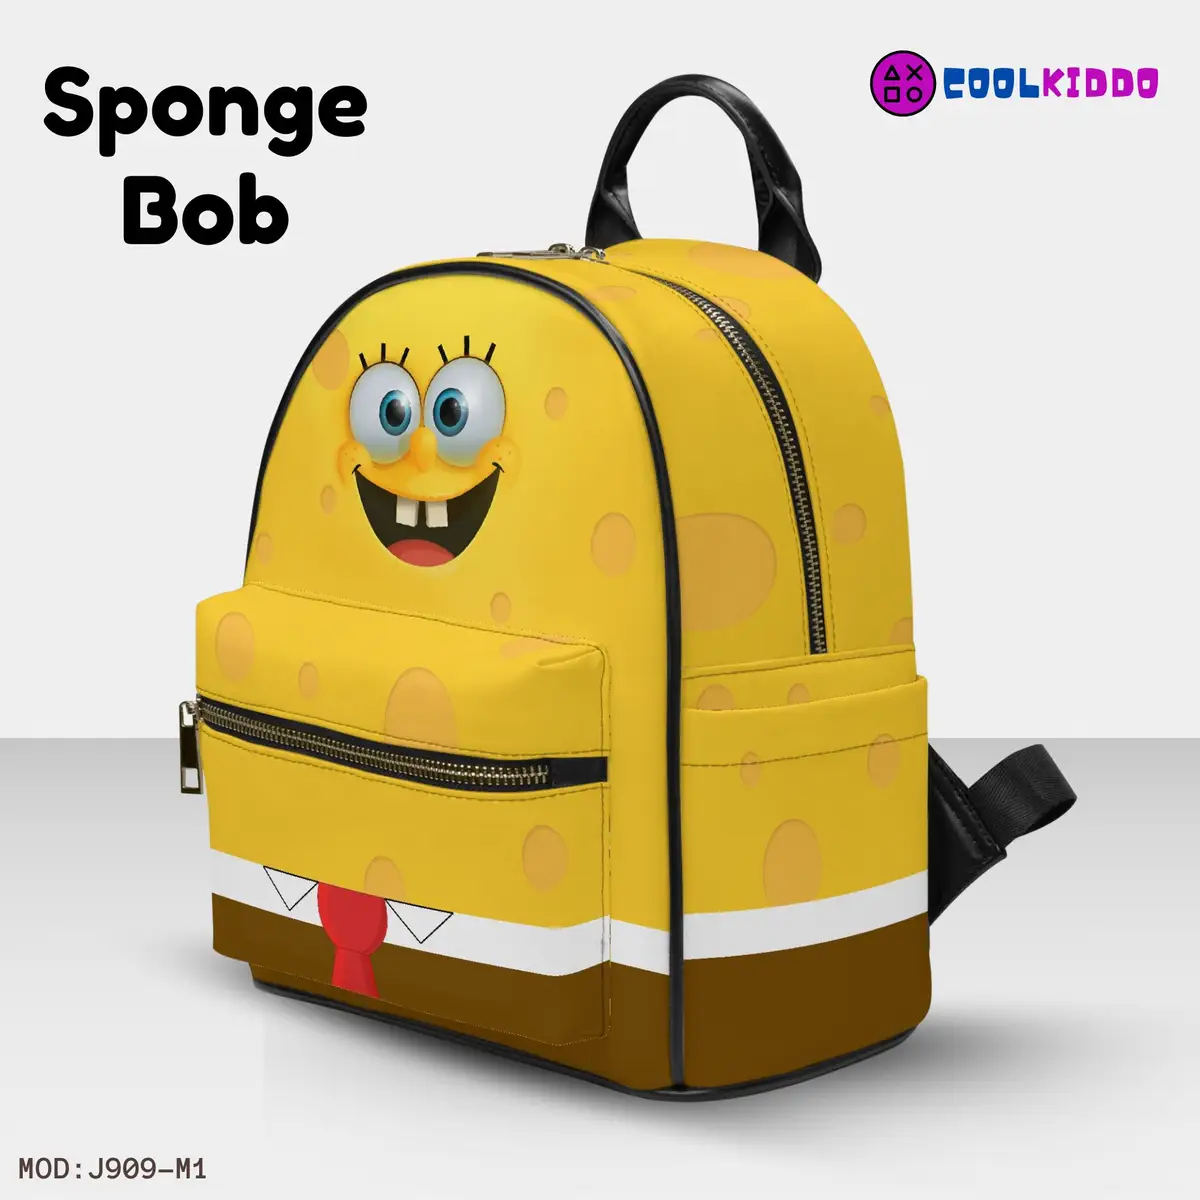 Sponge Bob Face Little Backpack – Fun All-Over Print Leather Street Bag for Girls Cool Kiddo 10